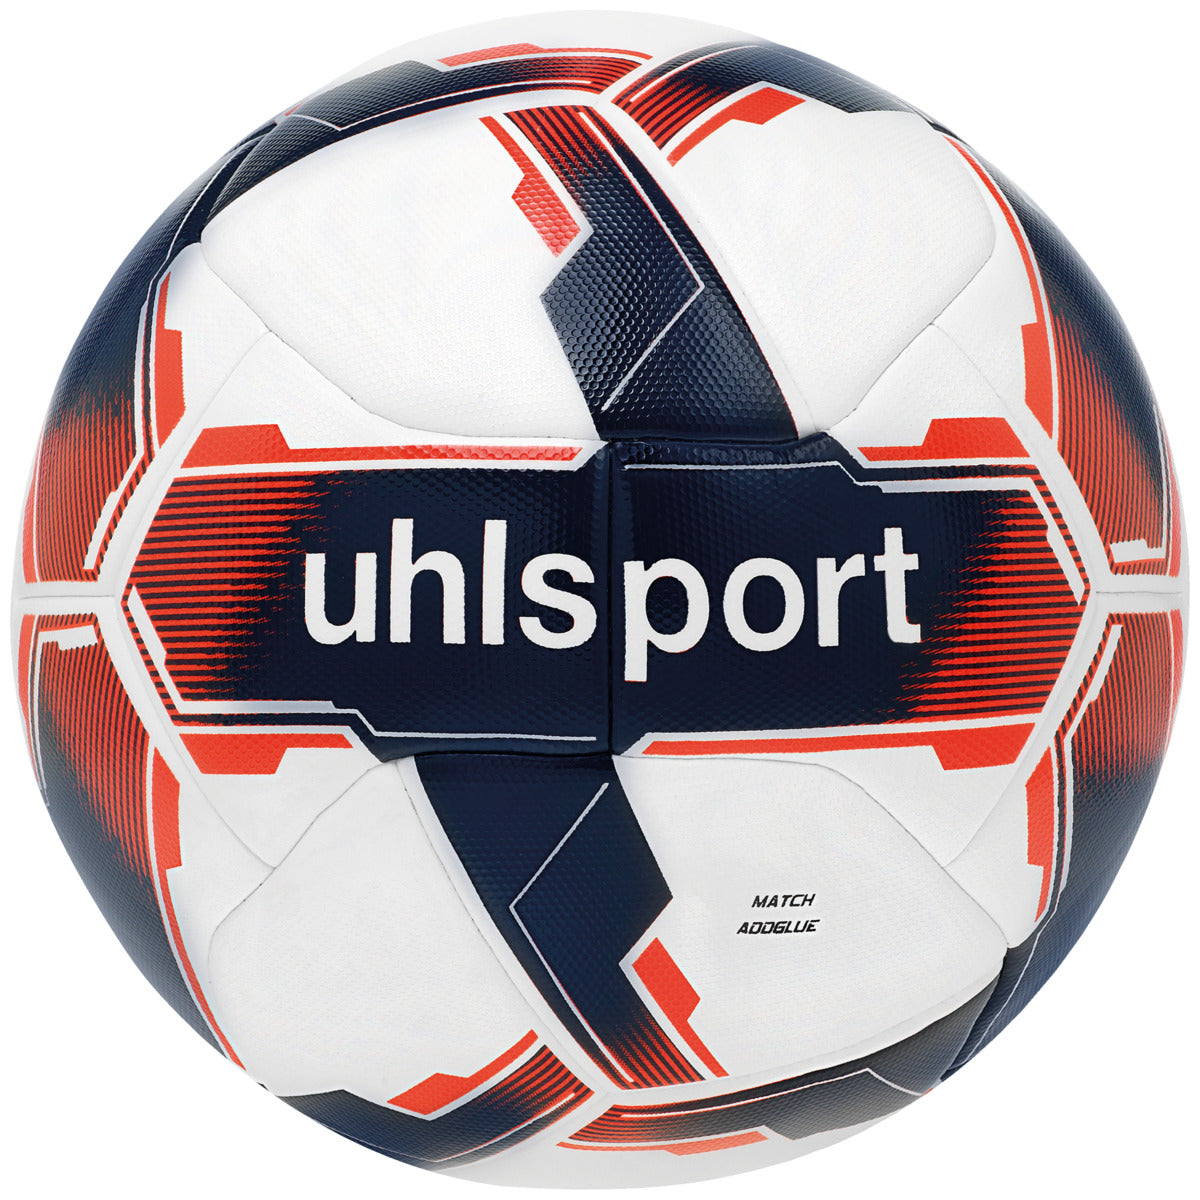 Uhlsport Match Addglue  - White